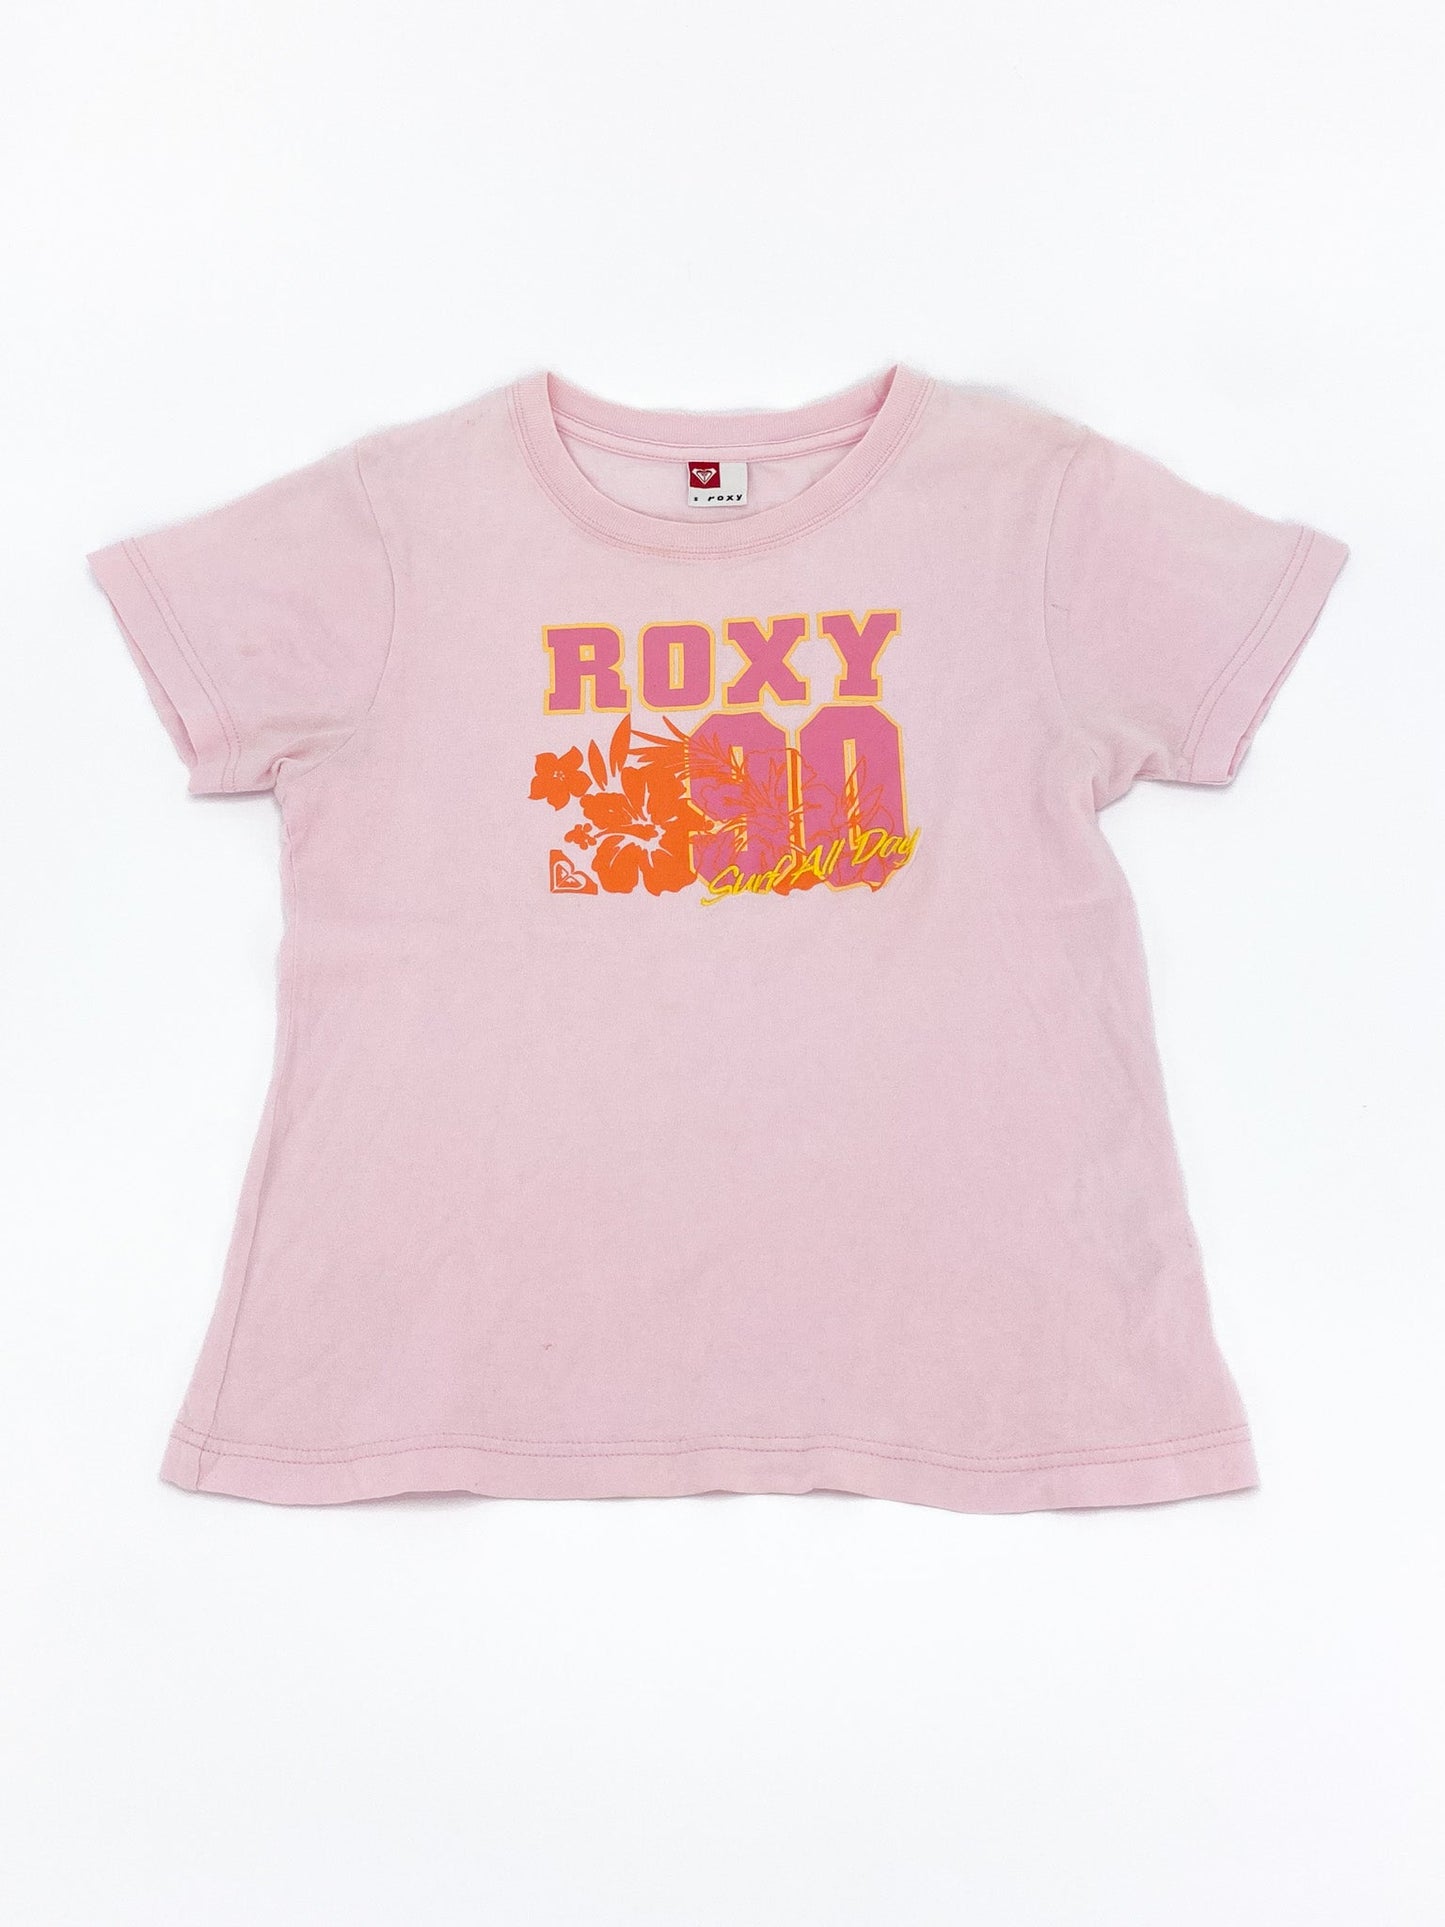 Vintage 00's Pink Roxy Top - M - Playground Vintage